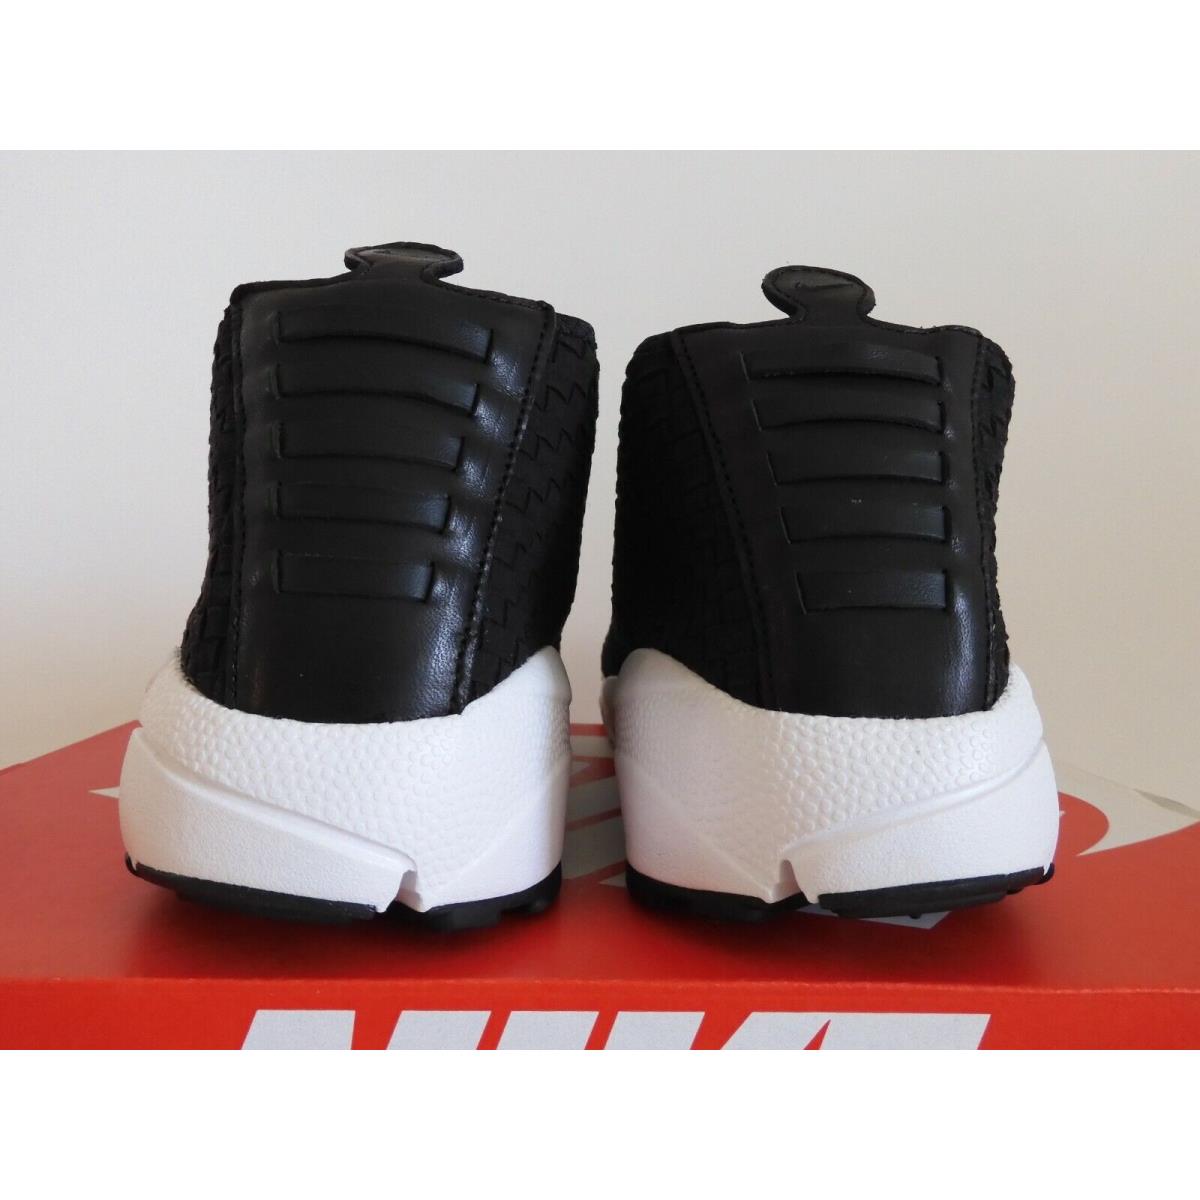 Nike shoes Air Footscape - Black 2